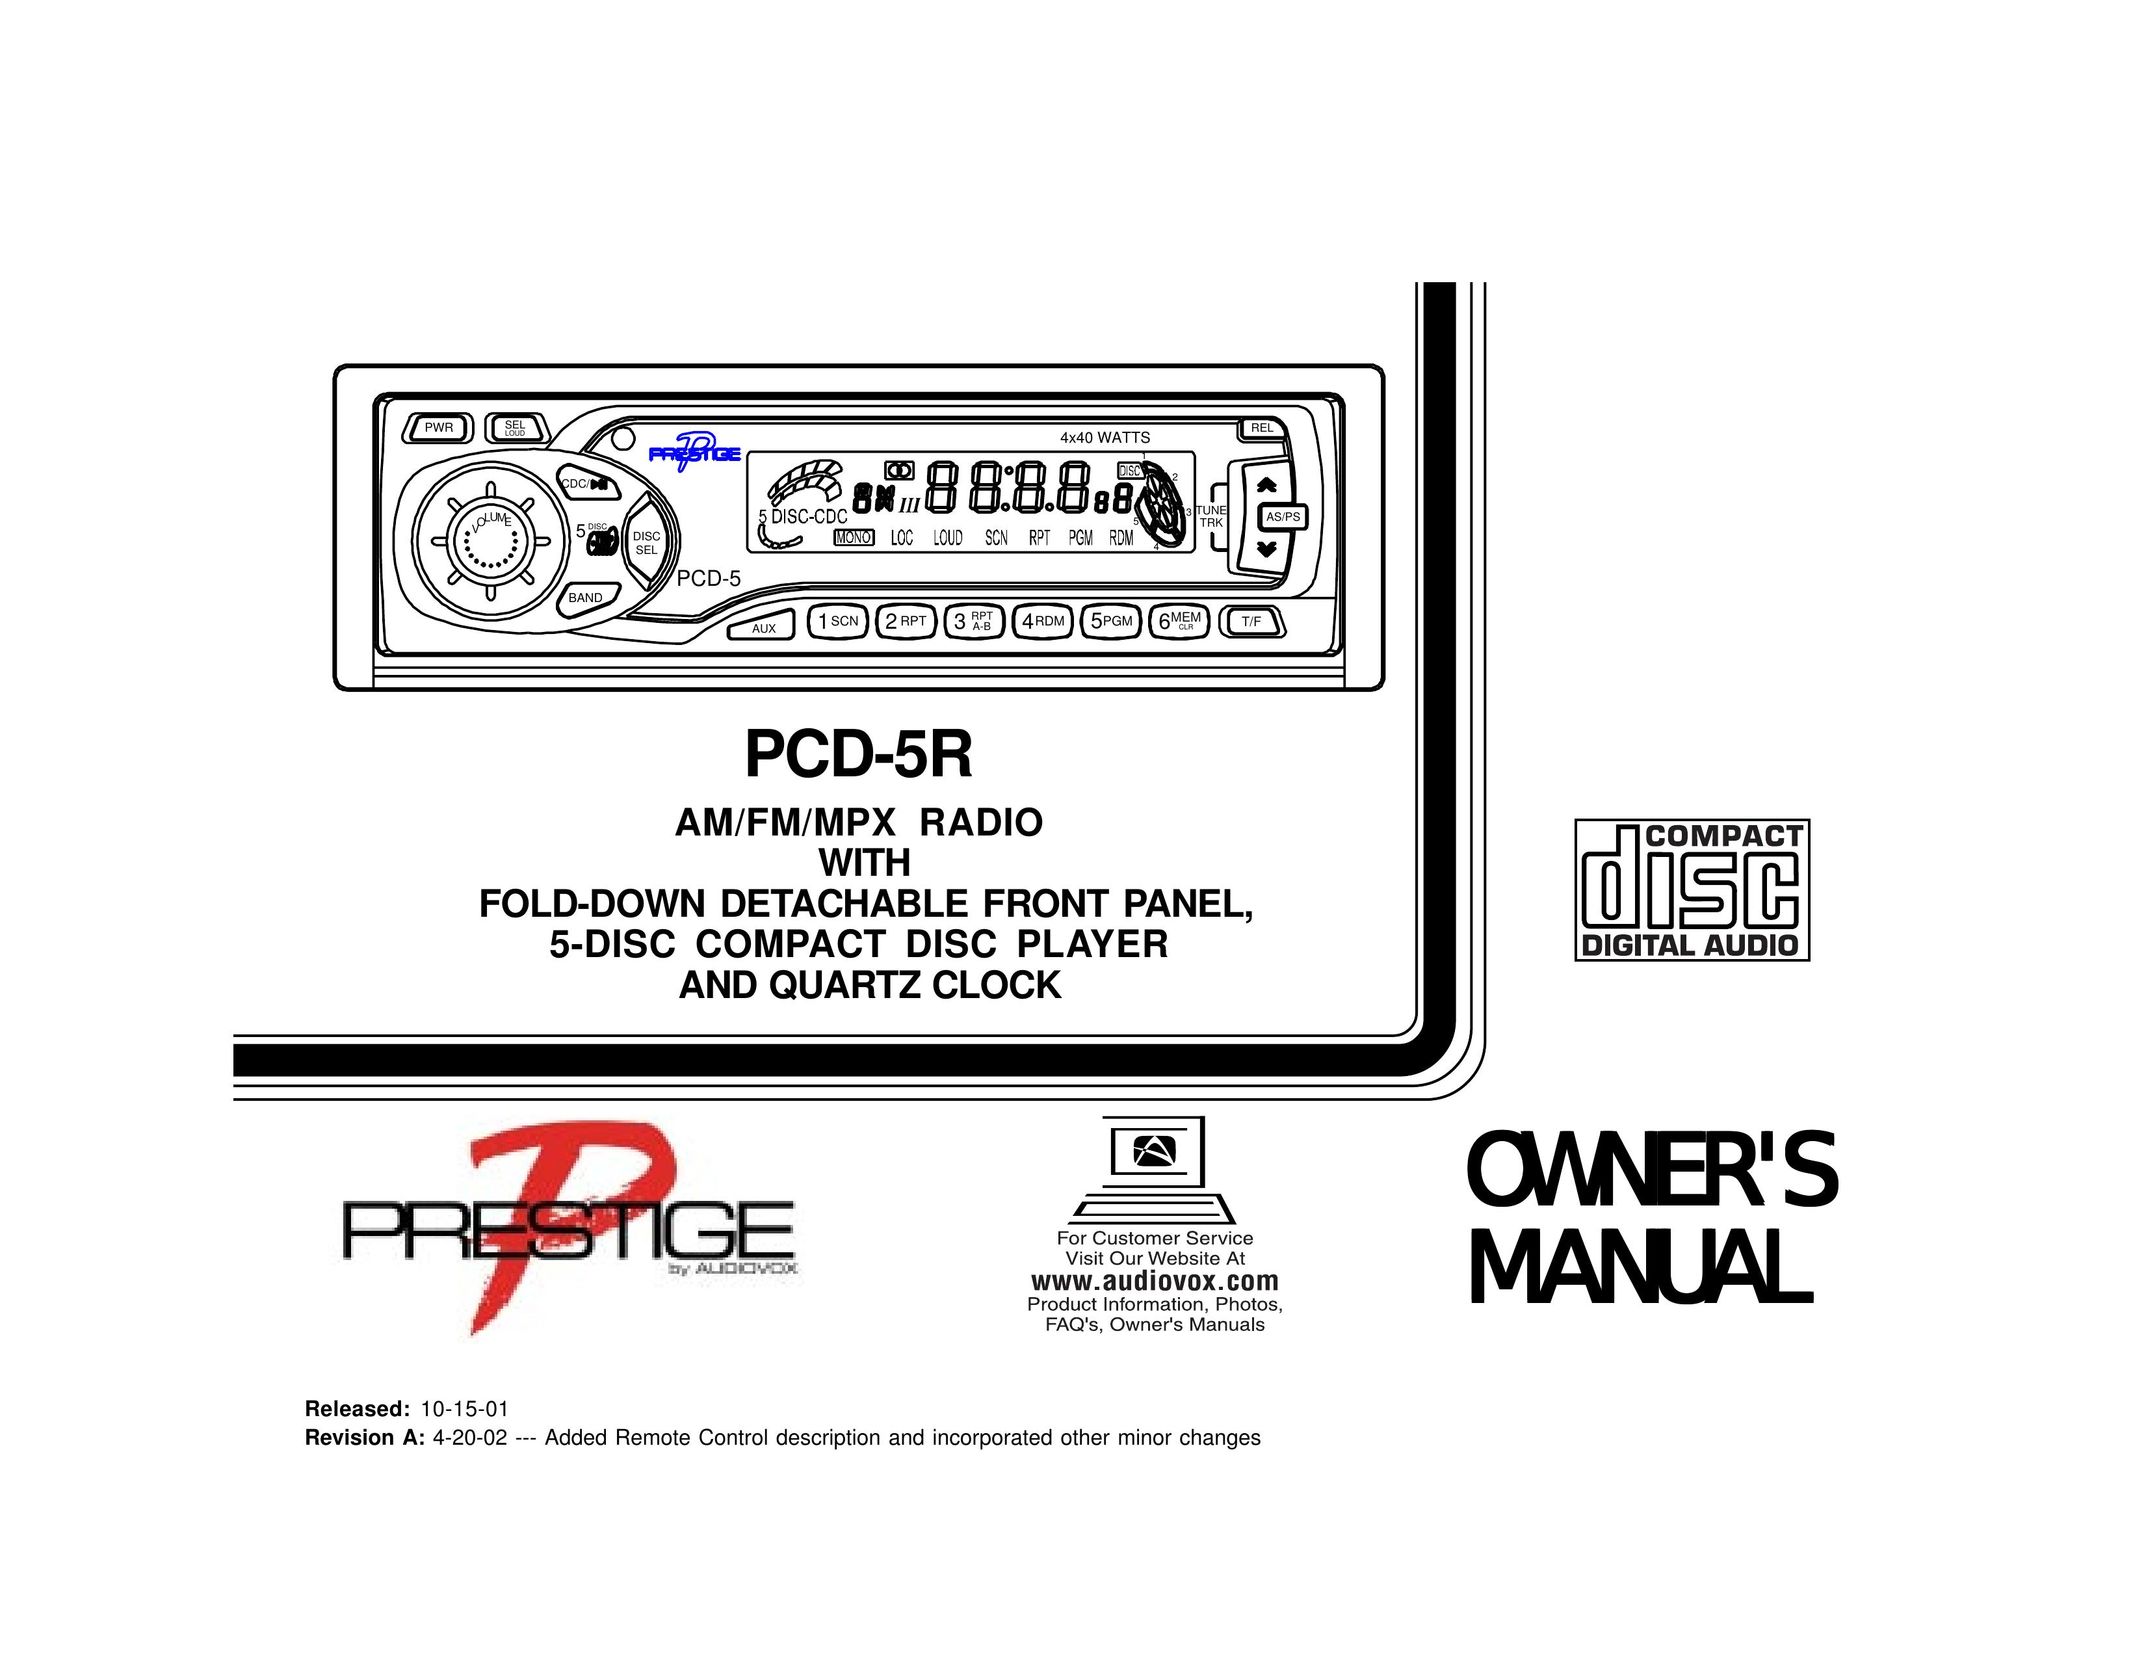 Audiovox PCD-5R CD Player User Manual